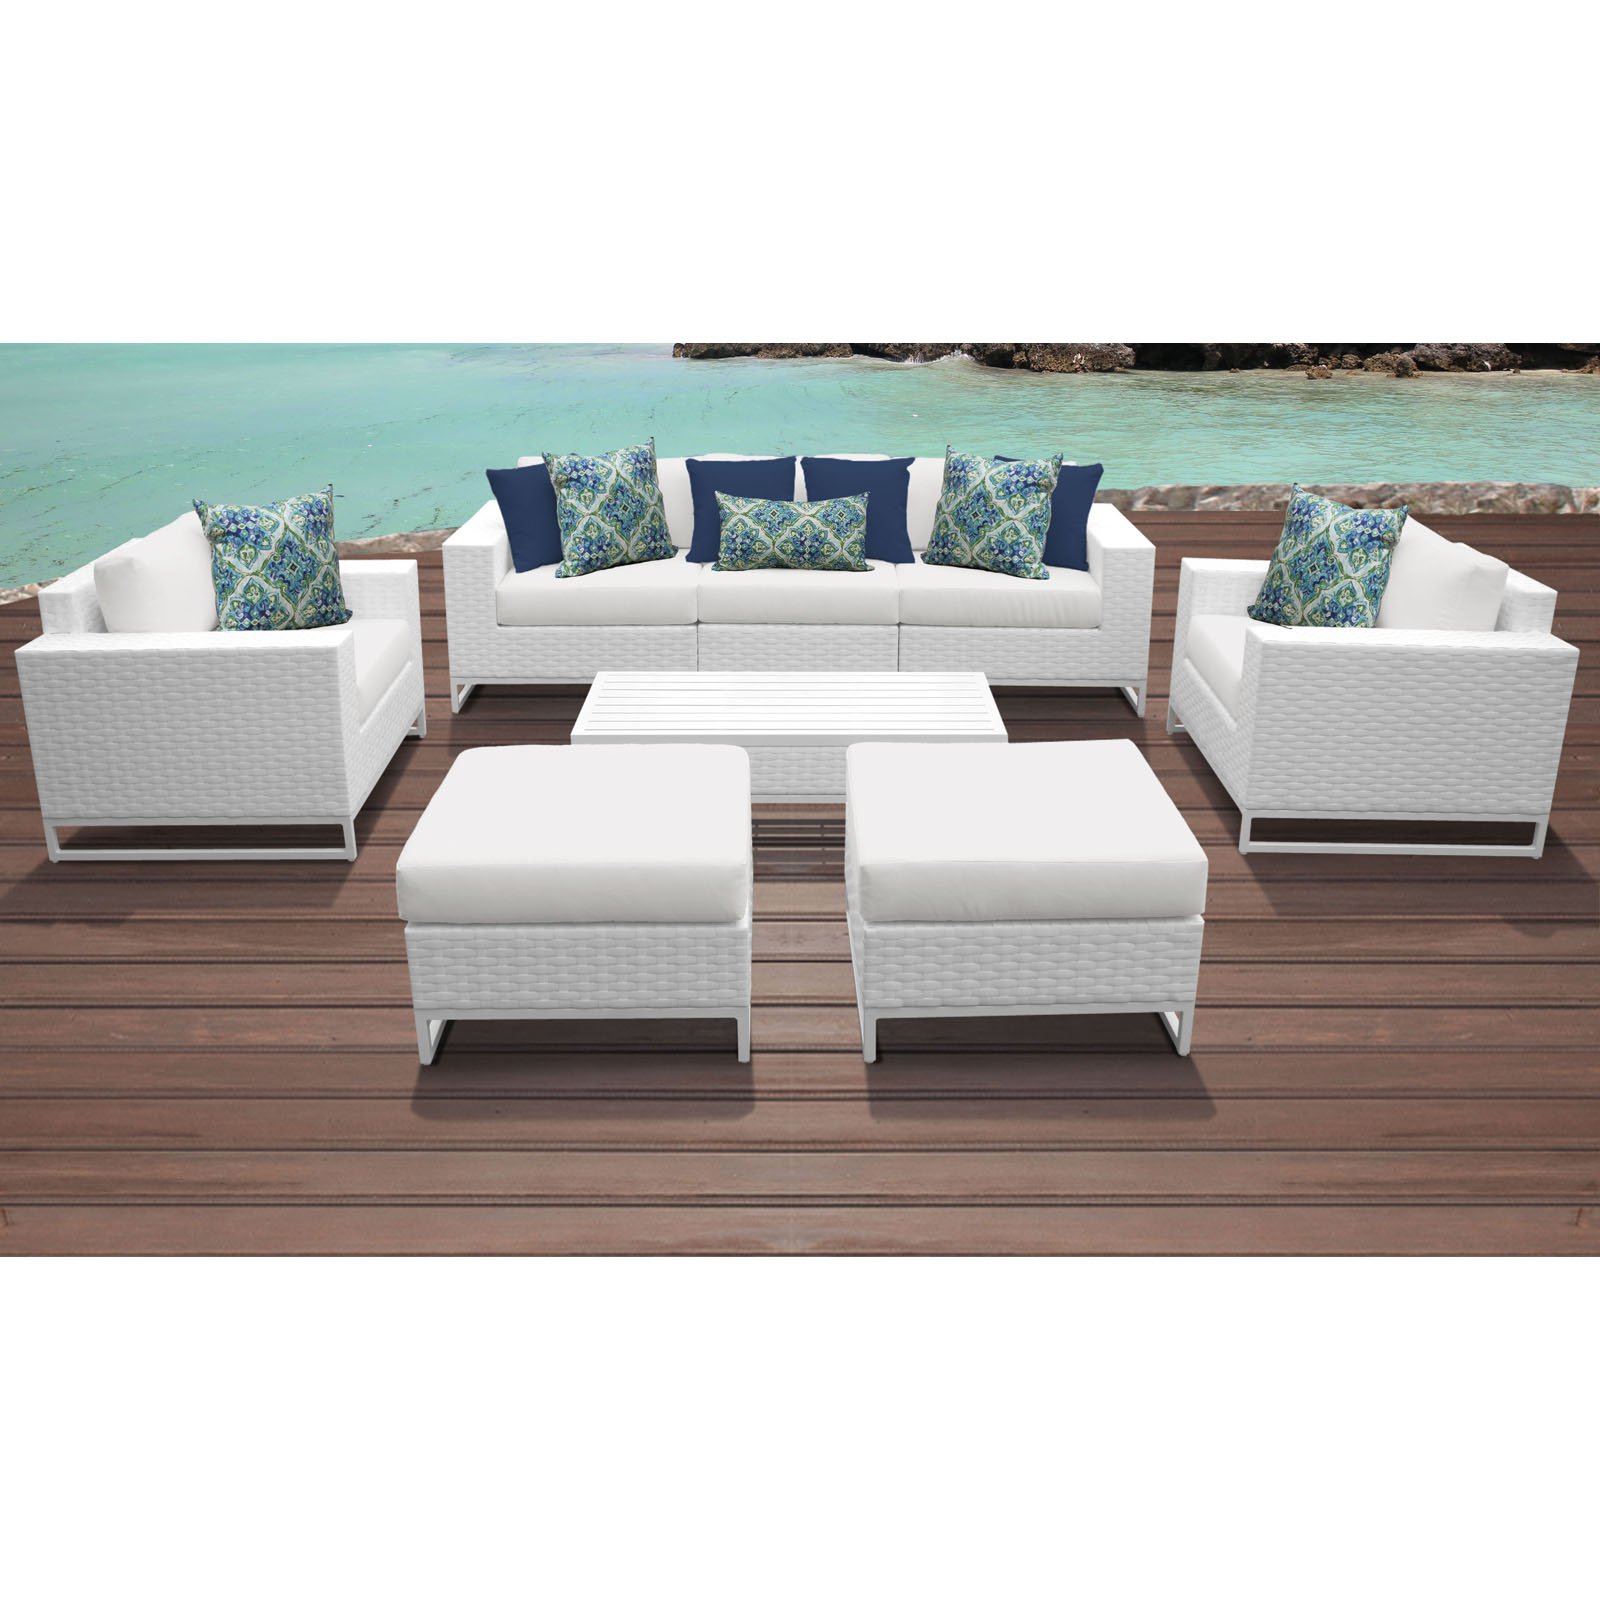 TK Classics MIAMI-08a-ARUBA Miami 8 Piece Outdoor Wicker Patio Furniture Set 08a&#44; Aruba - image 3 of 3